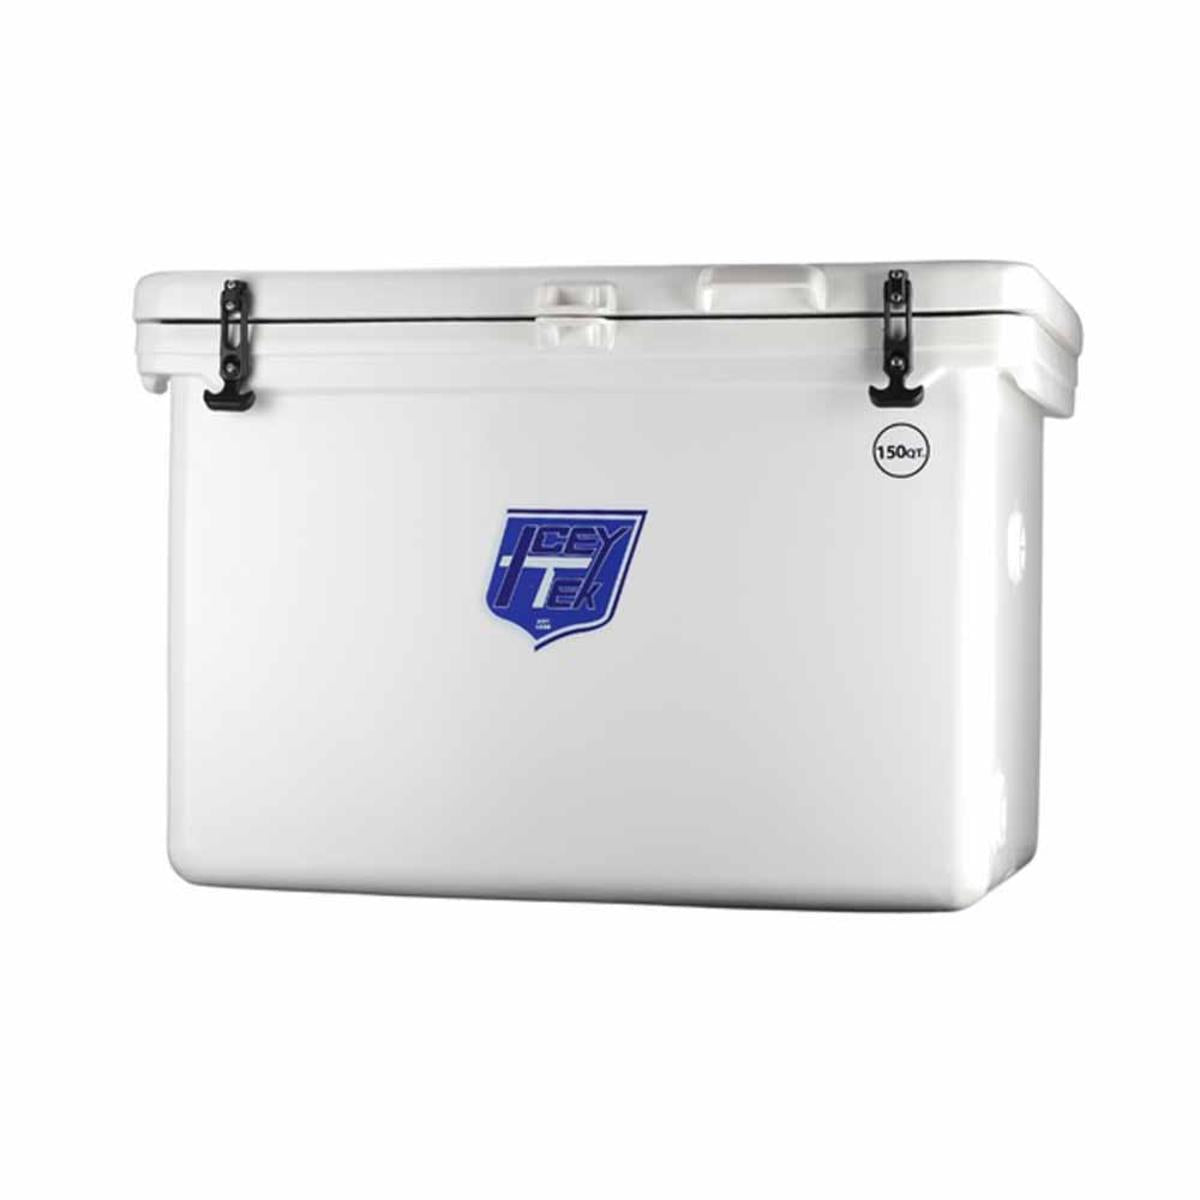 Icey-Tek 150 Quart Rotomold Cooler